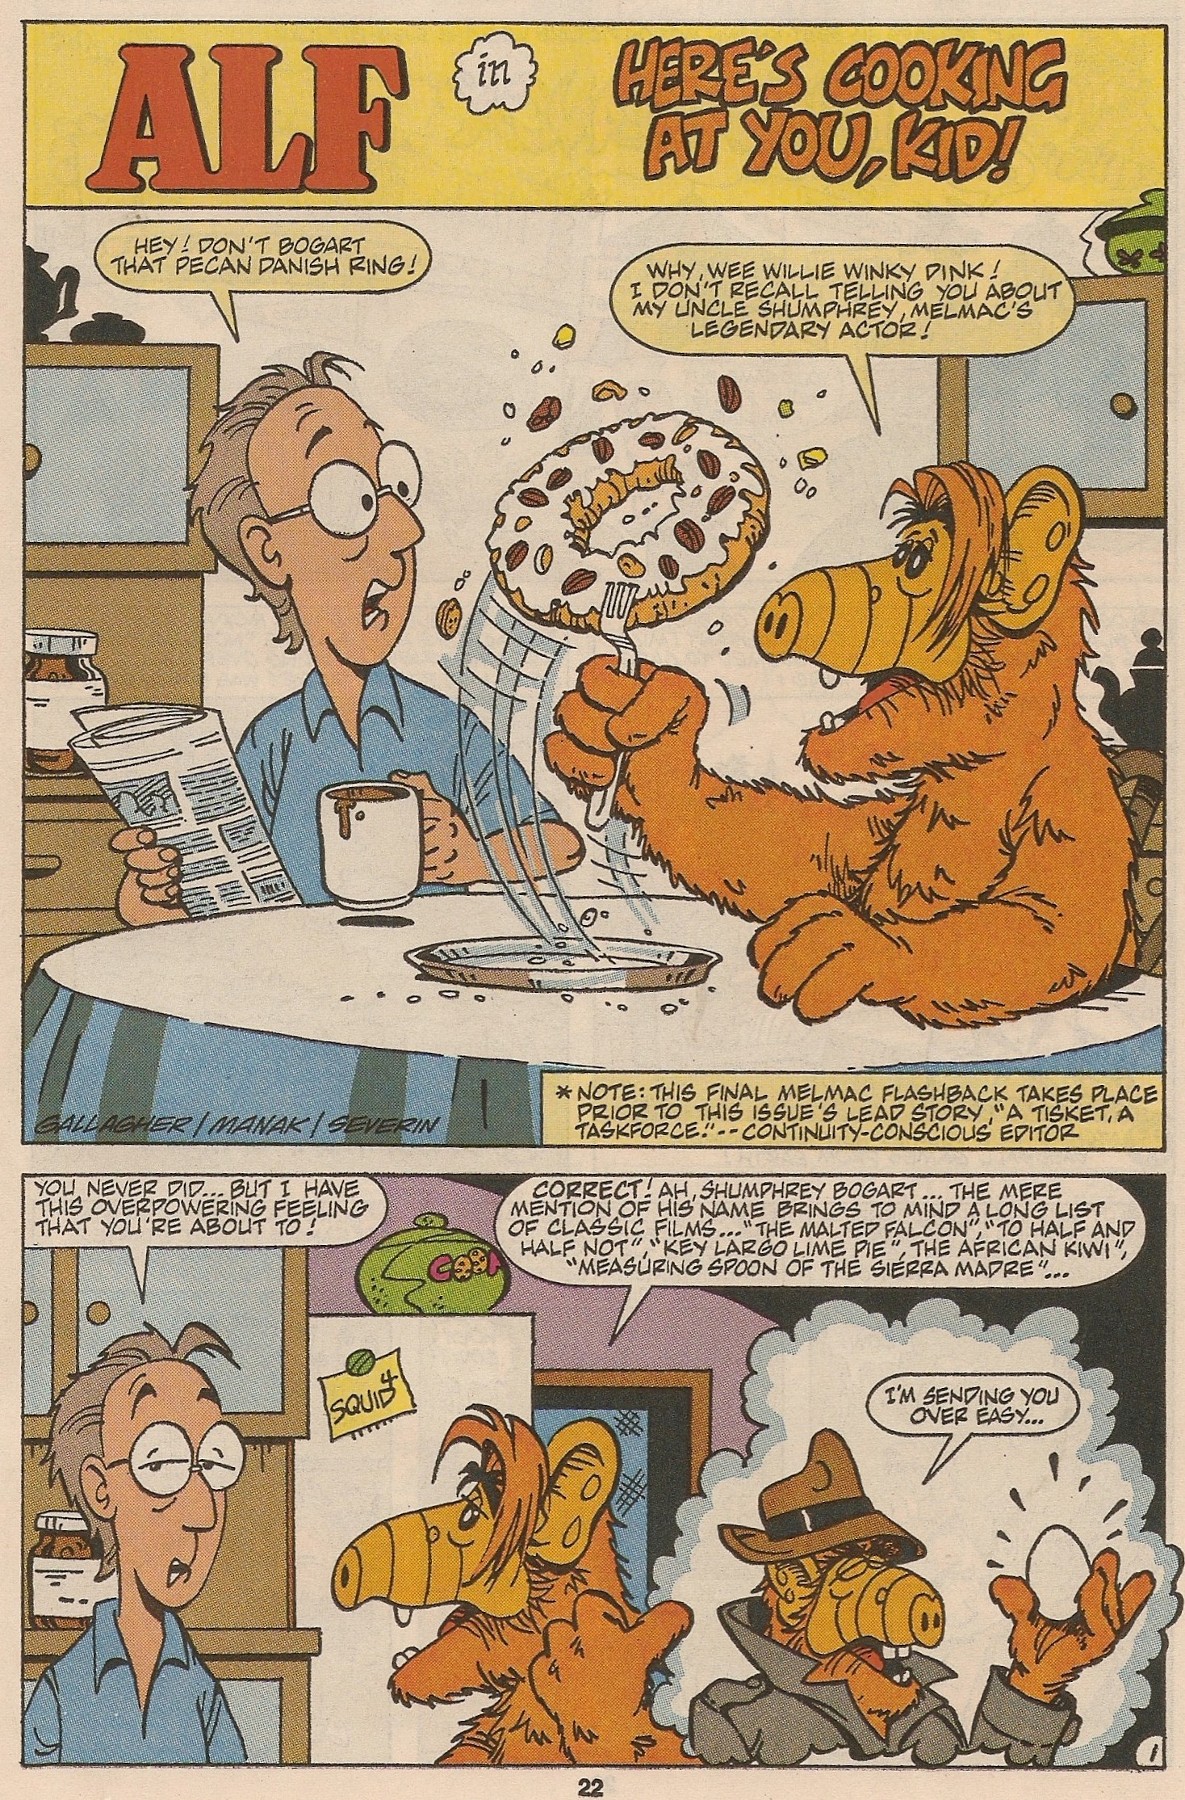 Alf 1 (Marvel Comics) - ComicBookRealm.com